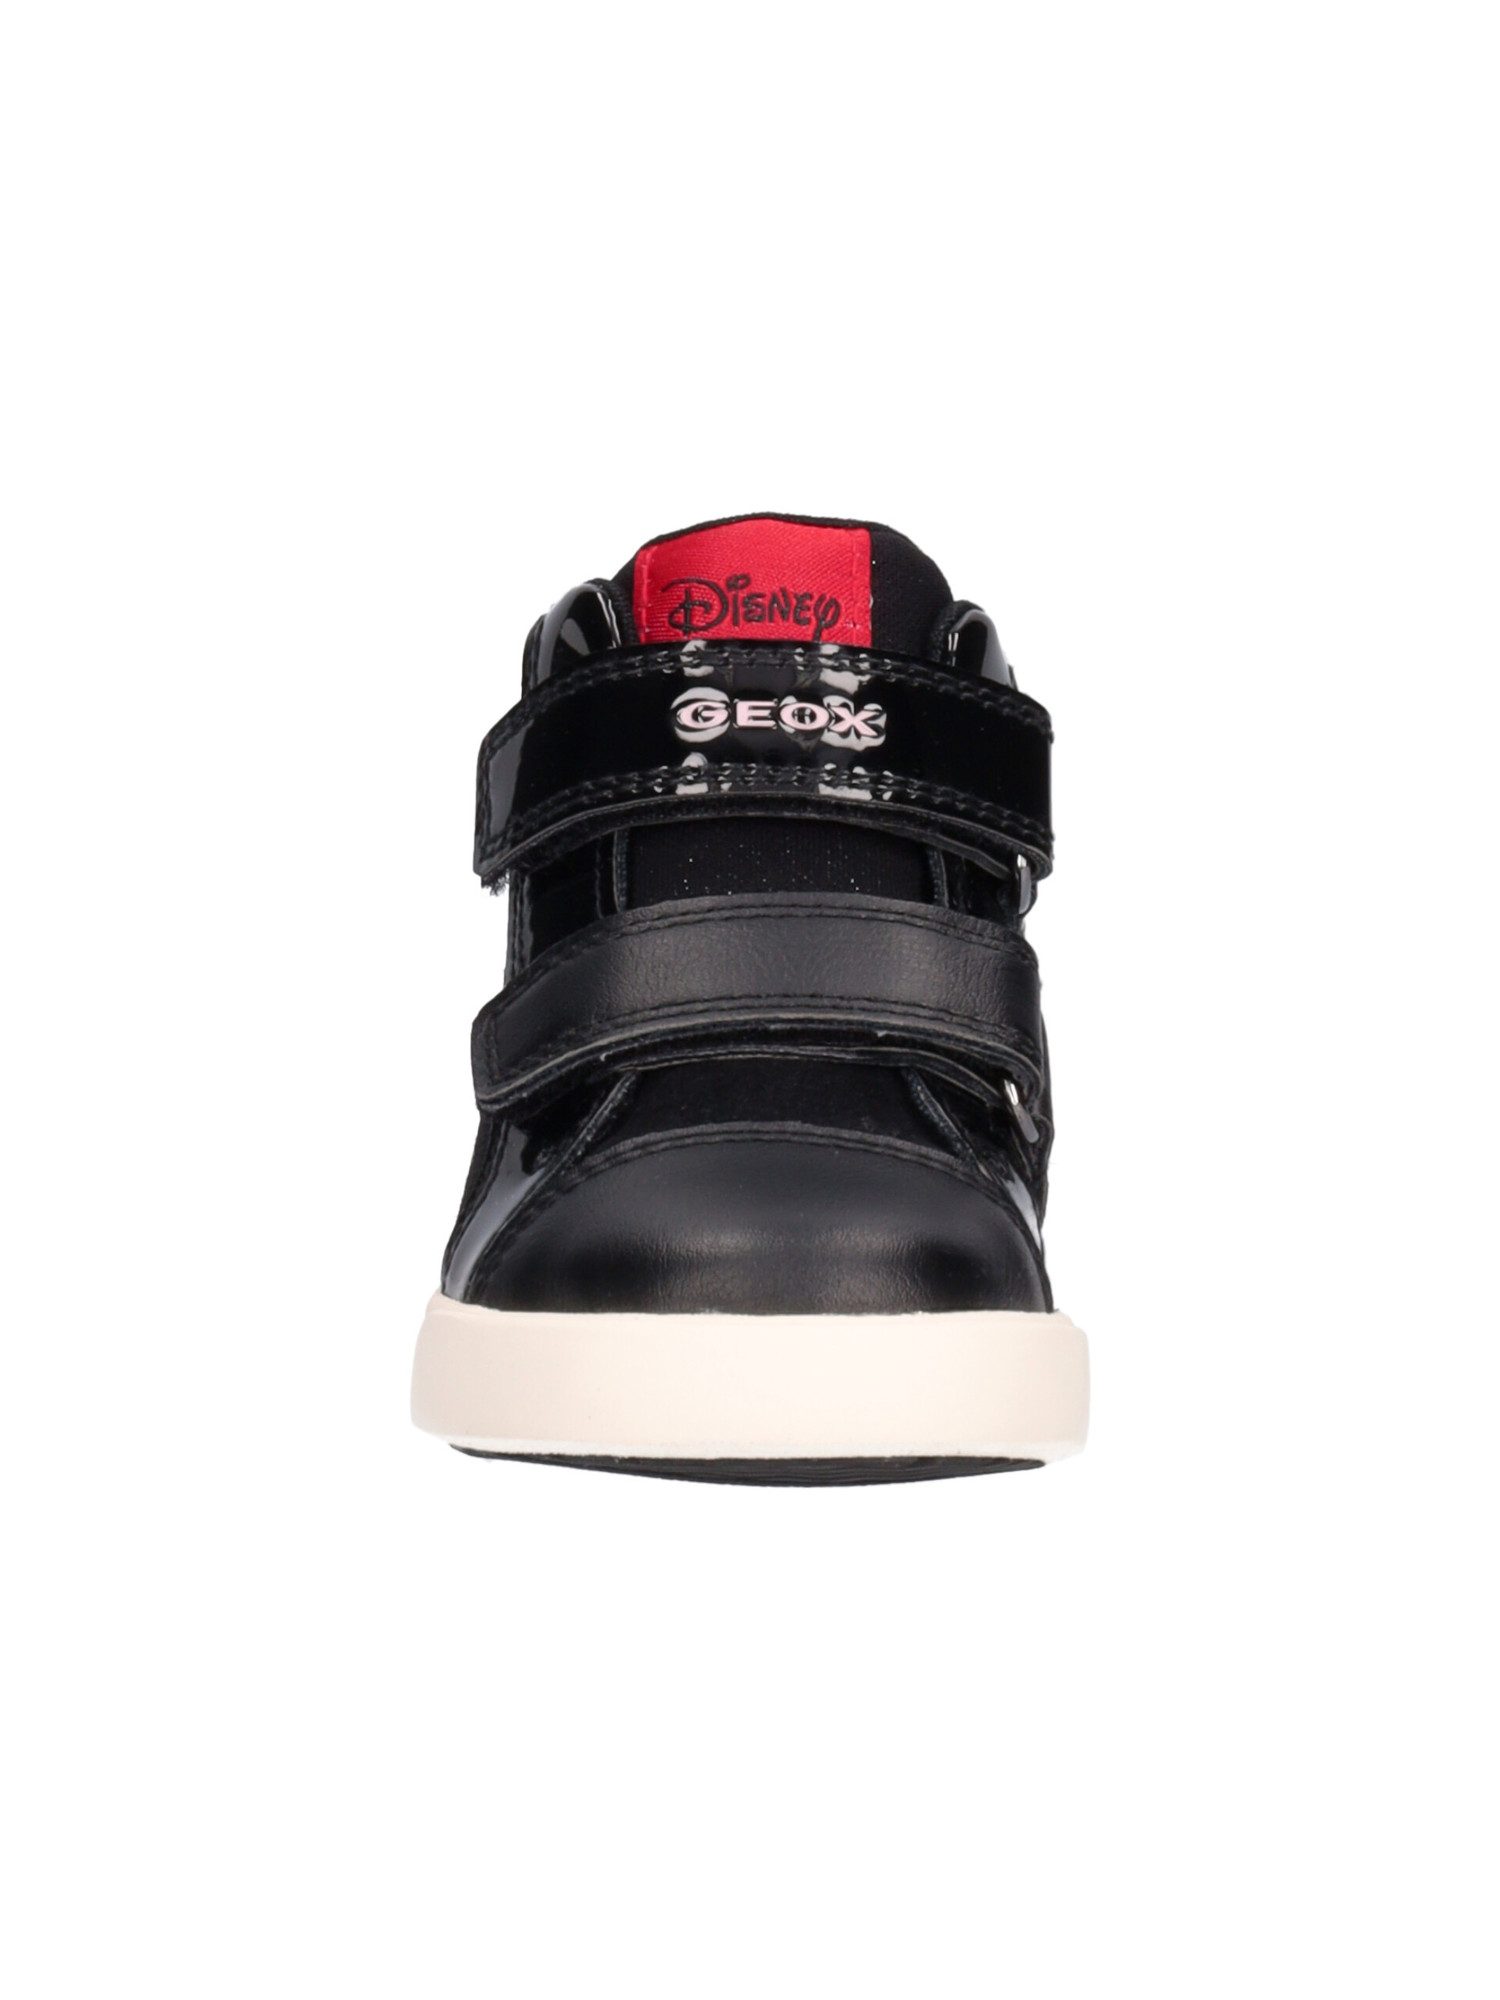 sneaker-minnie-by-geox-primi-passi-bambina-nera